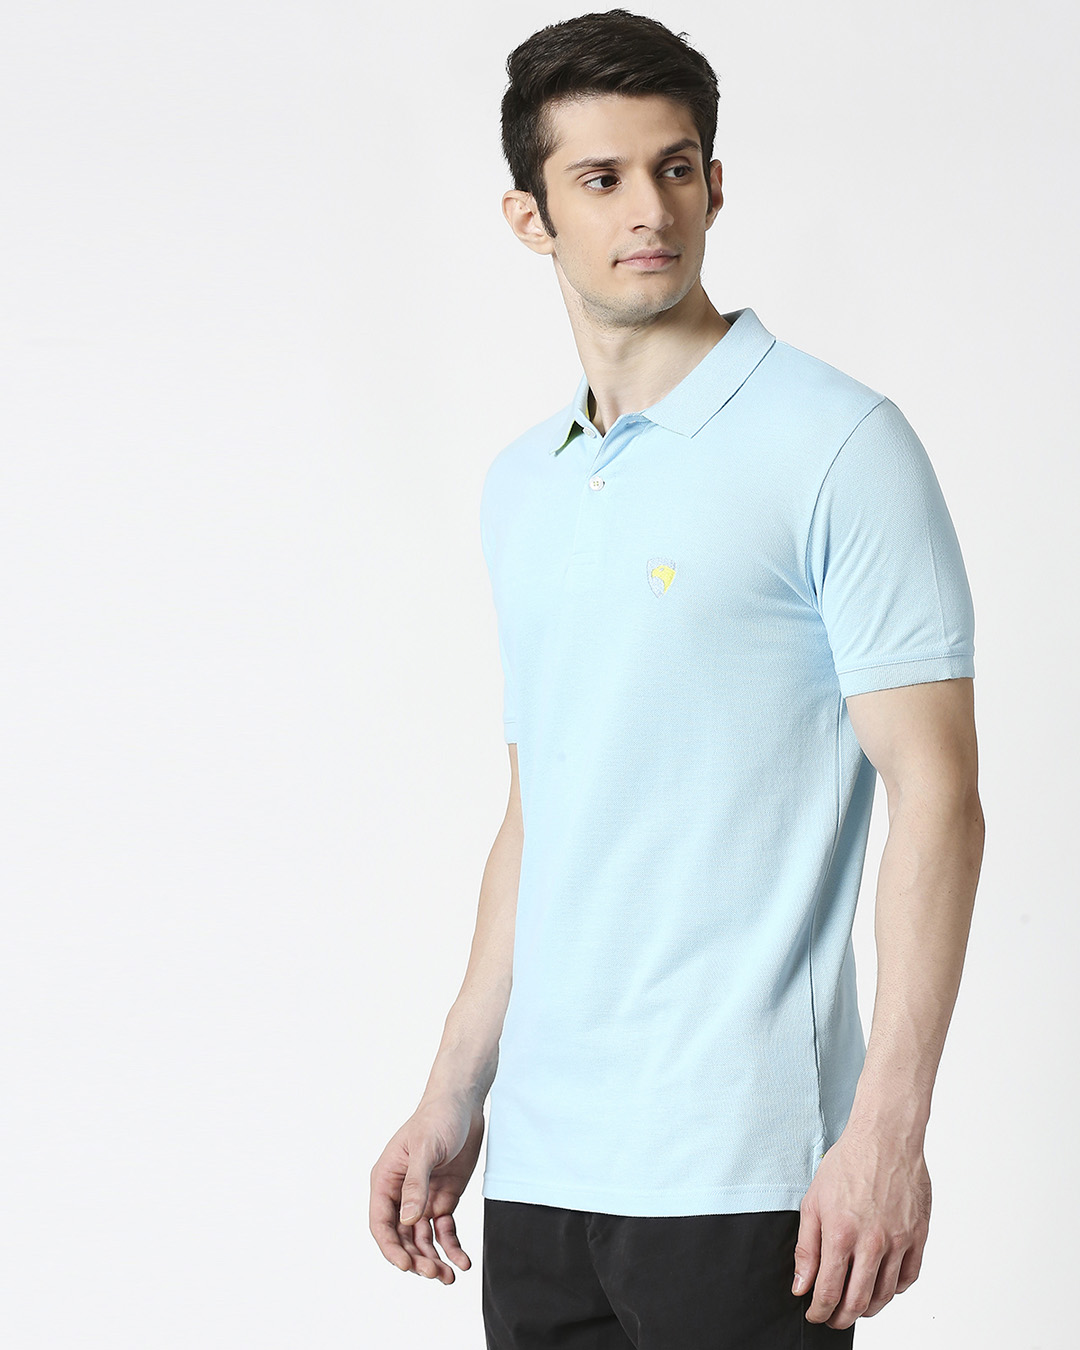 Shop Electric blue-Neon Lime Contrast Collar Pique Polo T-Shirt-Back